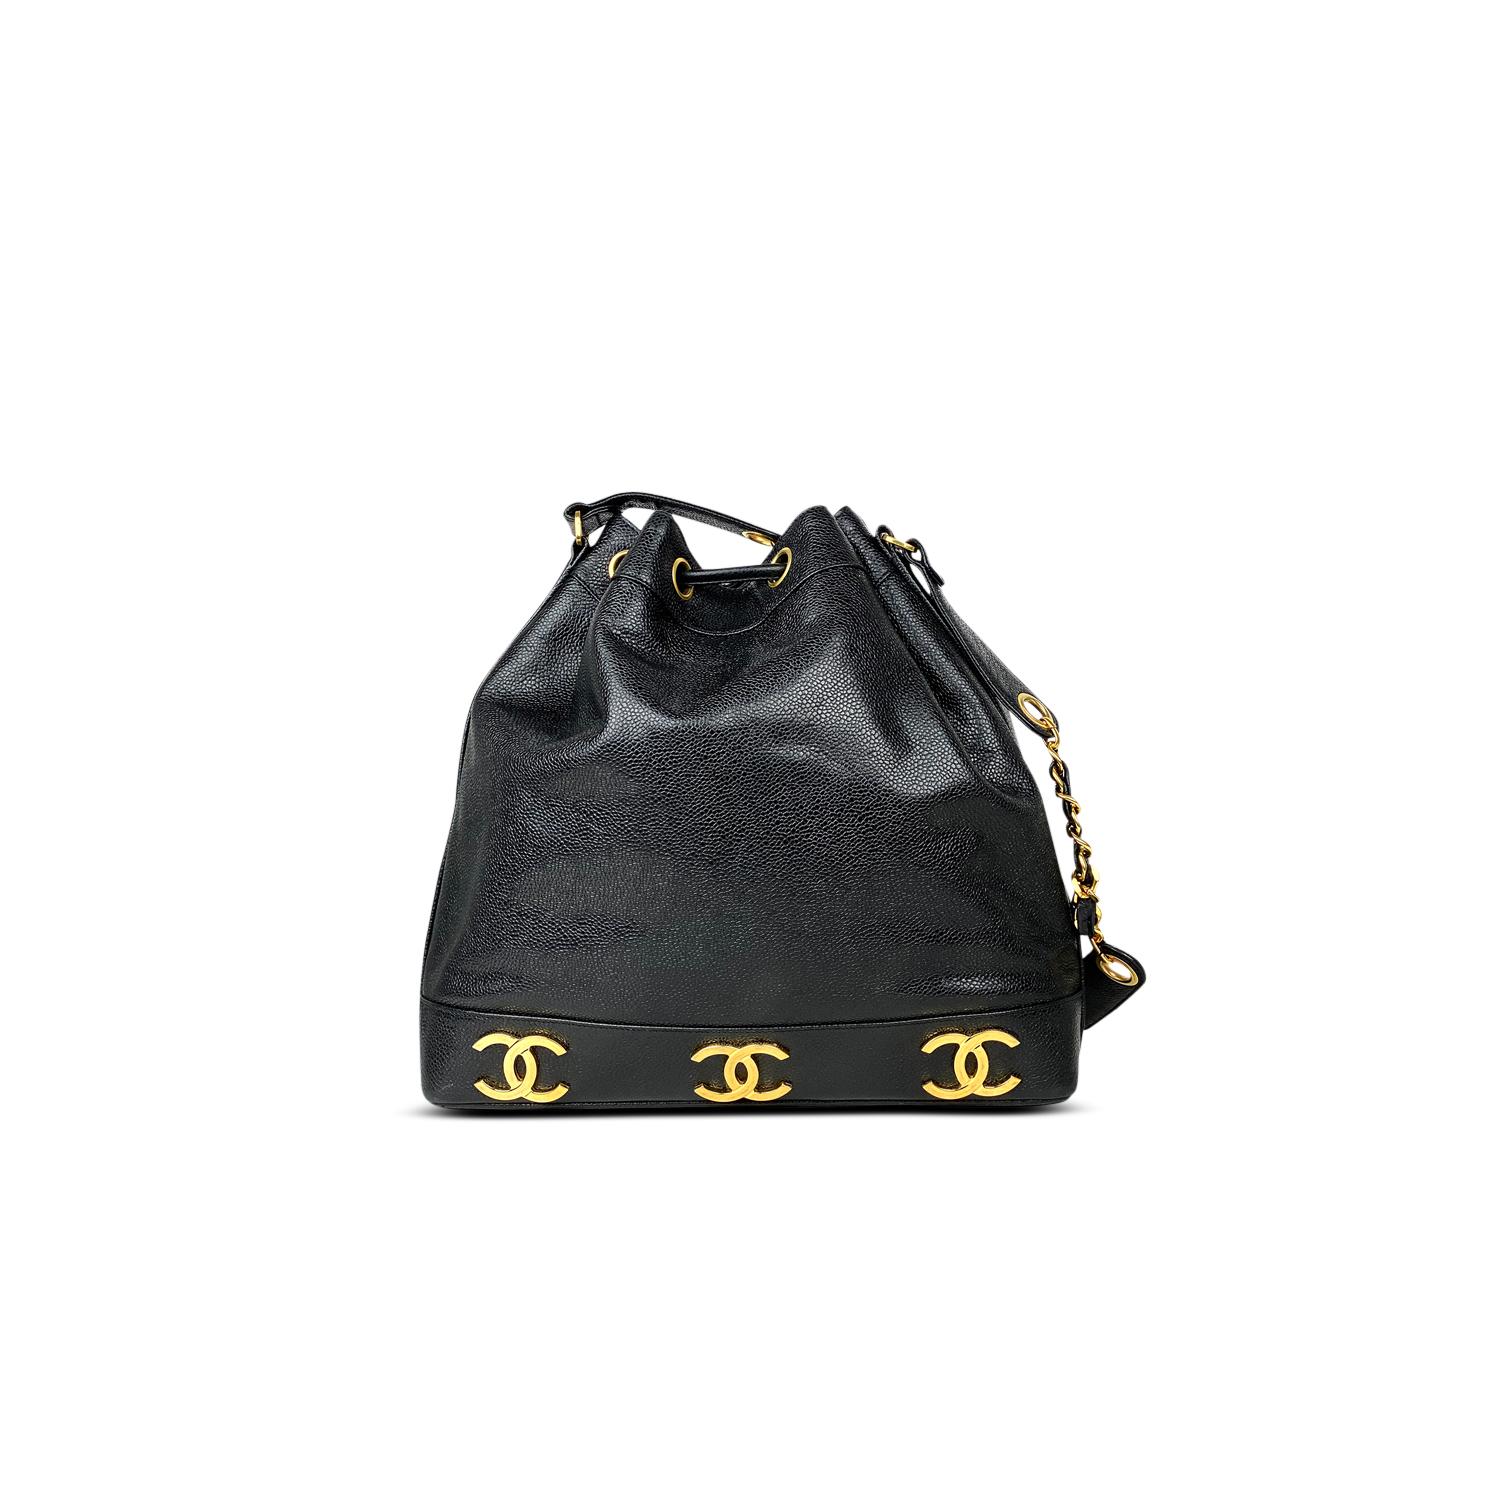 Chanel Black Caviar Bucket Bag In Good Condition For Sale In Sundbyberg, SE